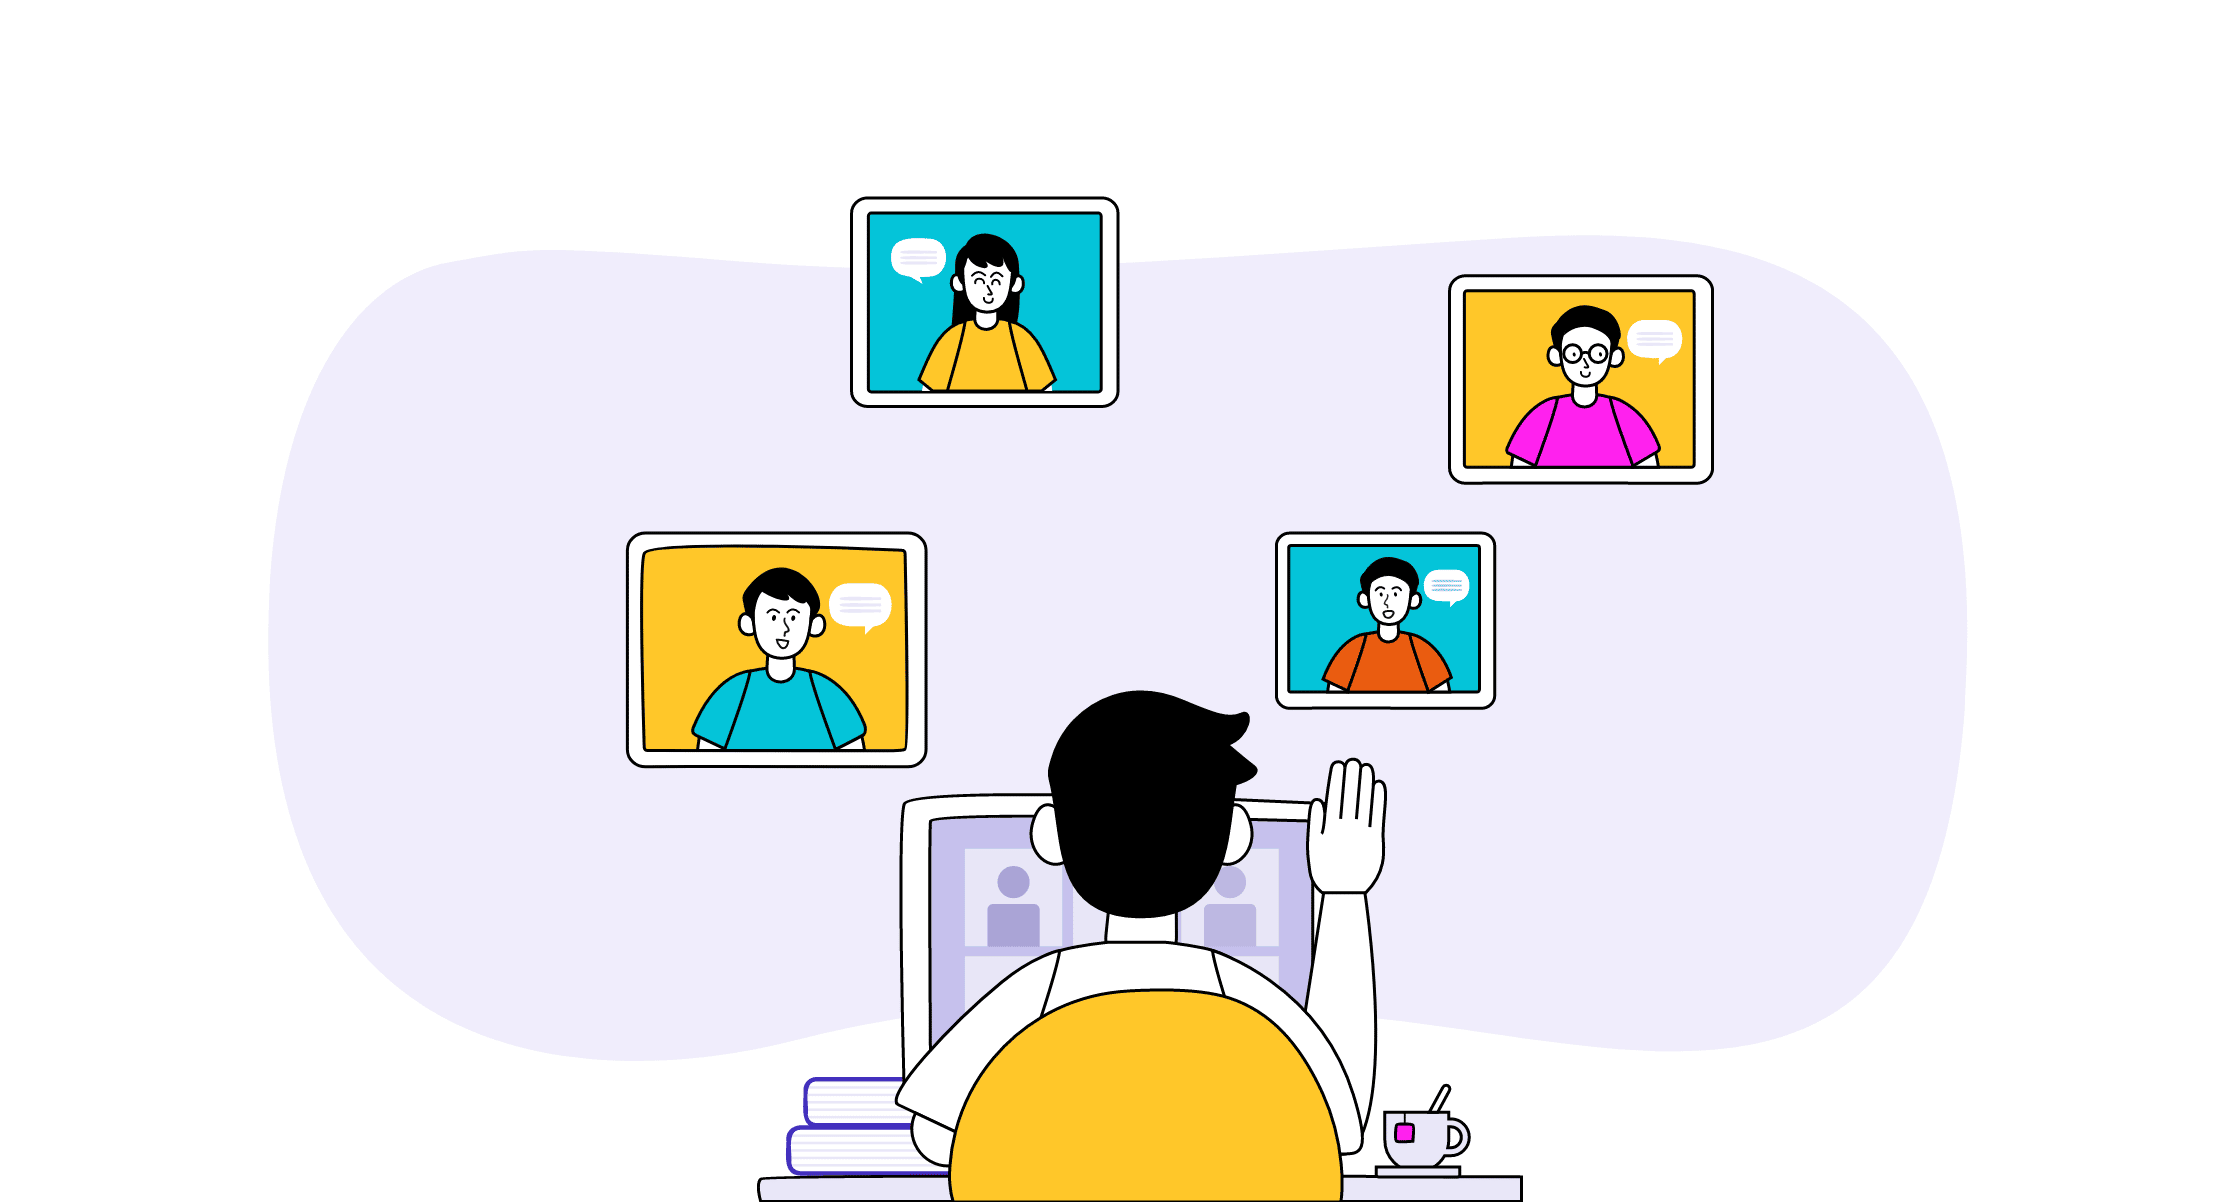 Sample image of a remote interpreting platform during an online meeting